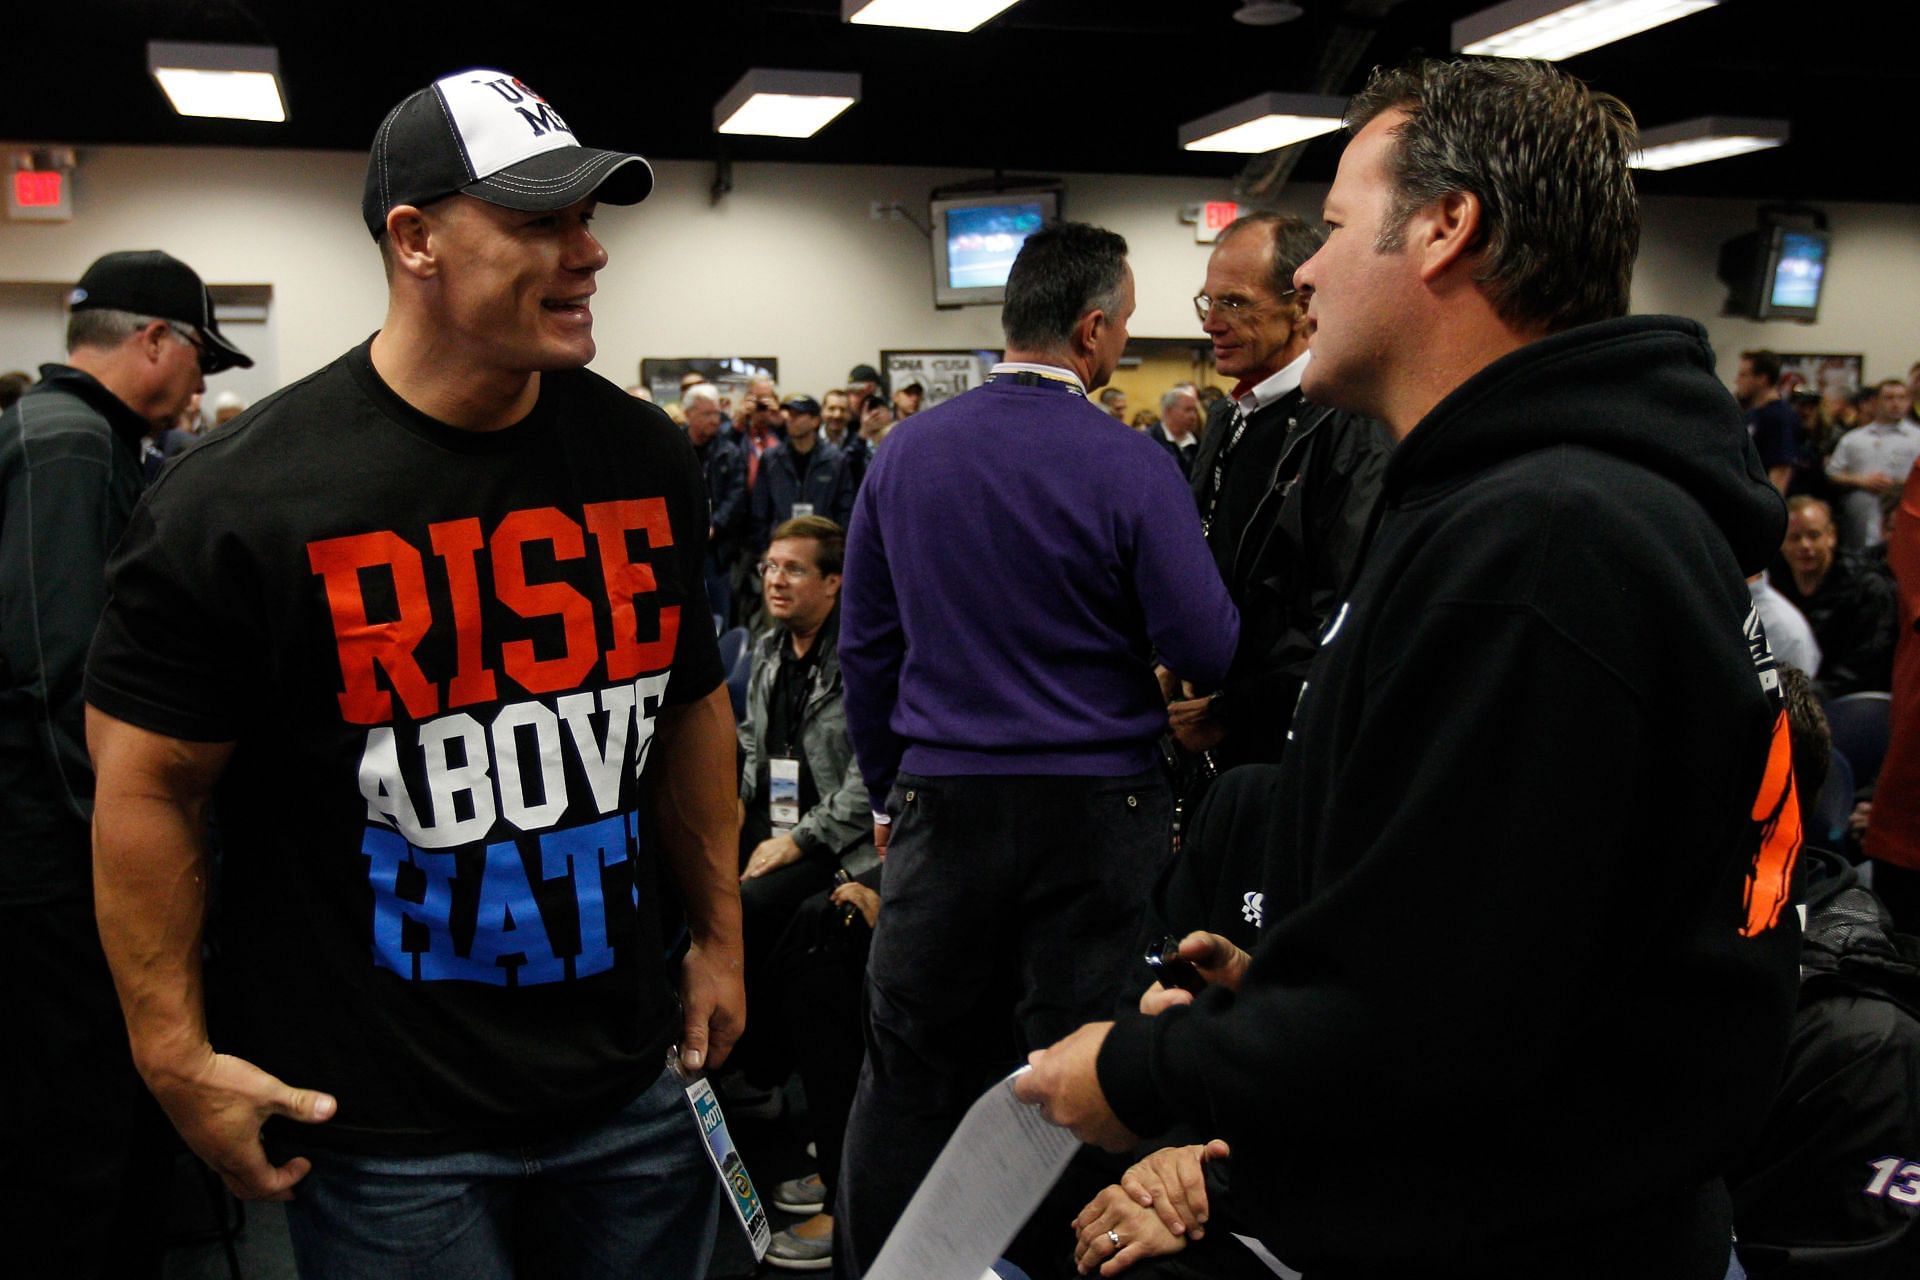 John Cena could bring many amazing skins to Fortnite Battle Royale (Image via Getty Images)